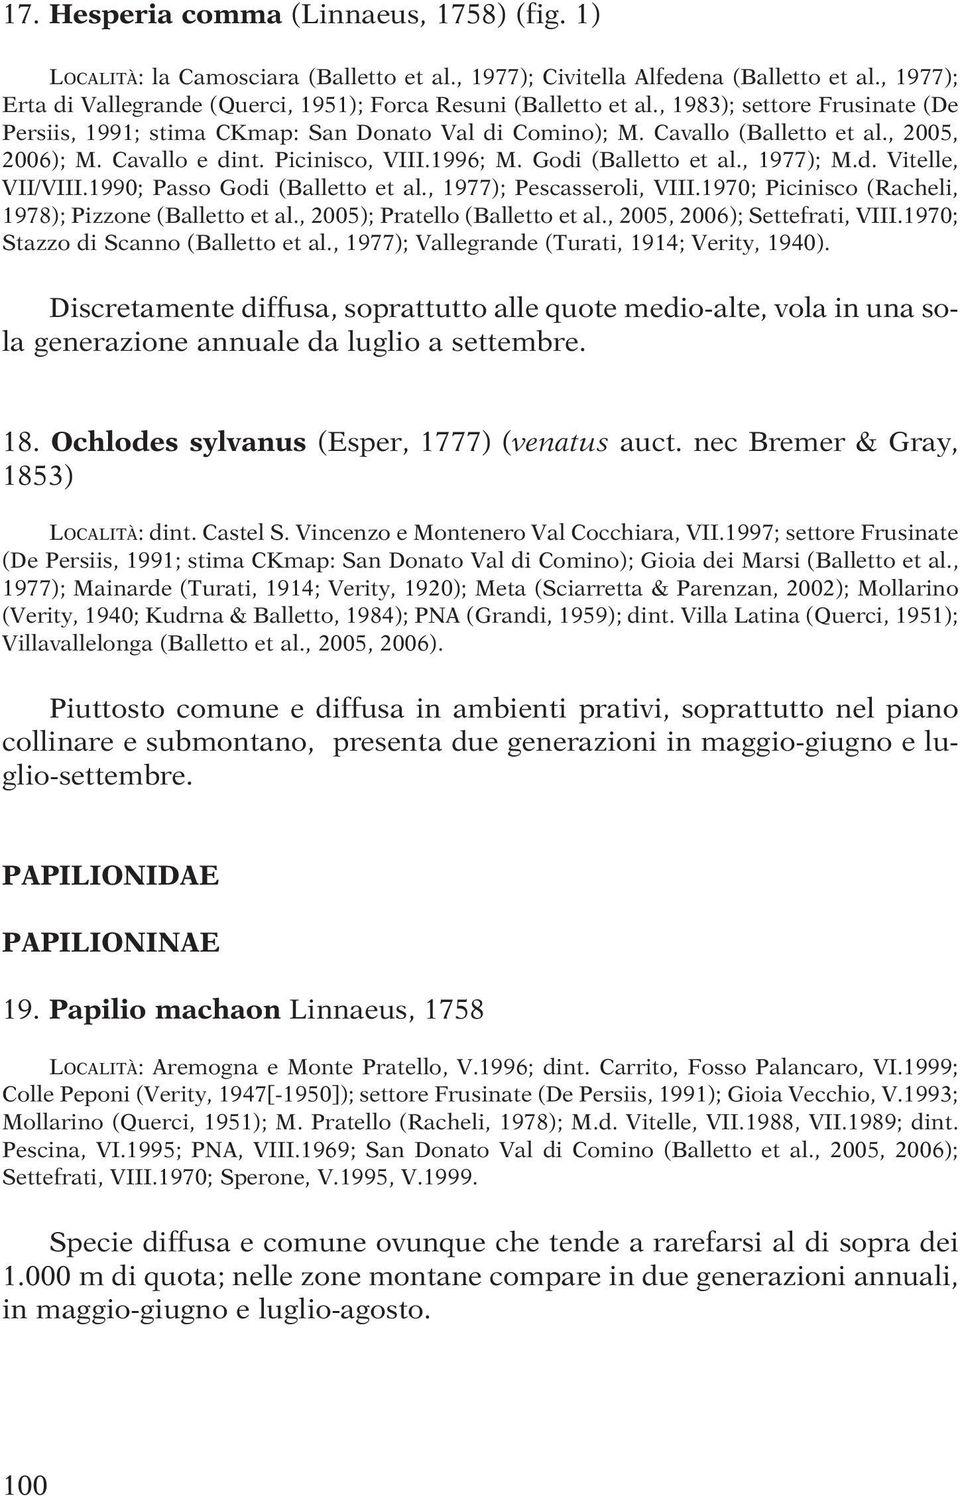 , 2005, 2006); M. Cavallo e dint. Picinisco, VIII.1996; M. Godi (Balletto et al., 1977); M.d. Vitelle, VII/VIII.1990; Passo Godi (Balletto et al., 1977); Pescasseroli, VIII.